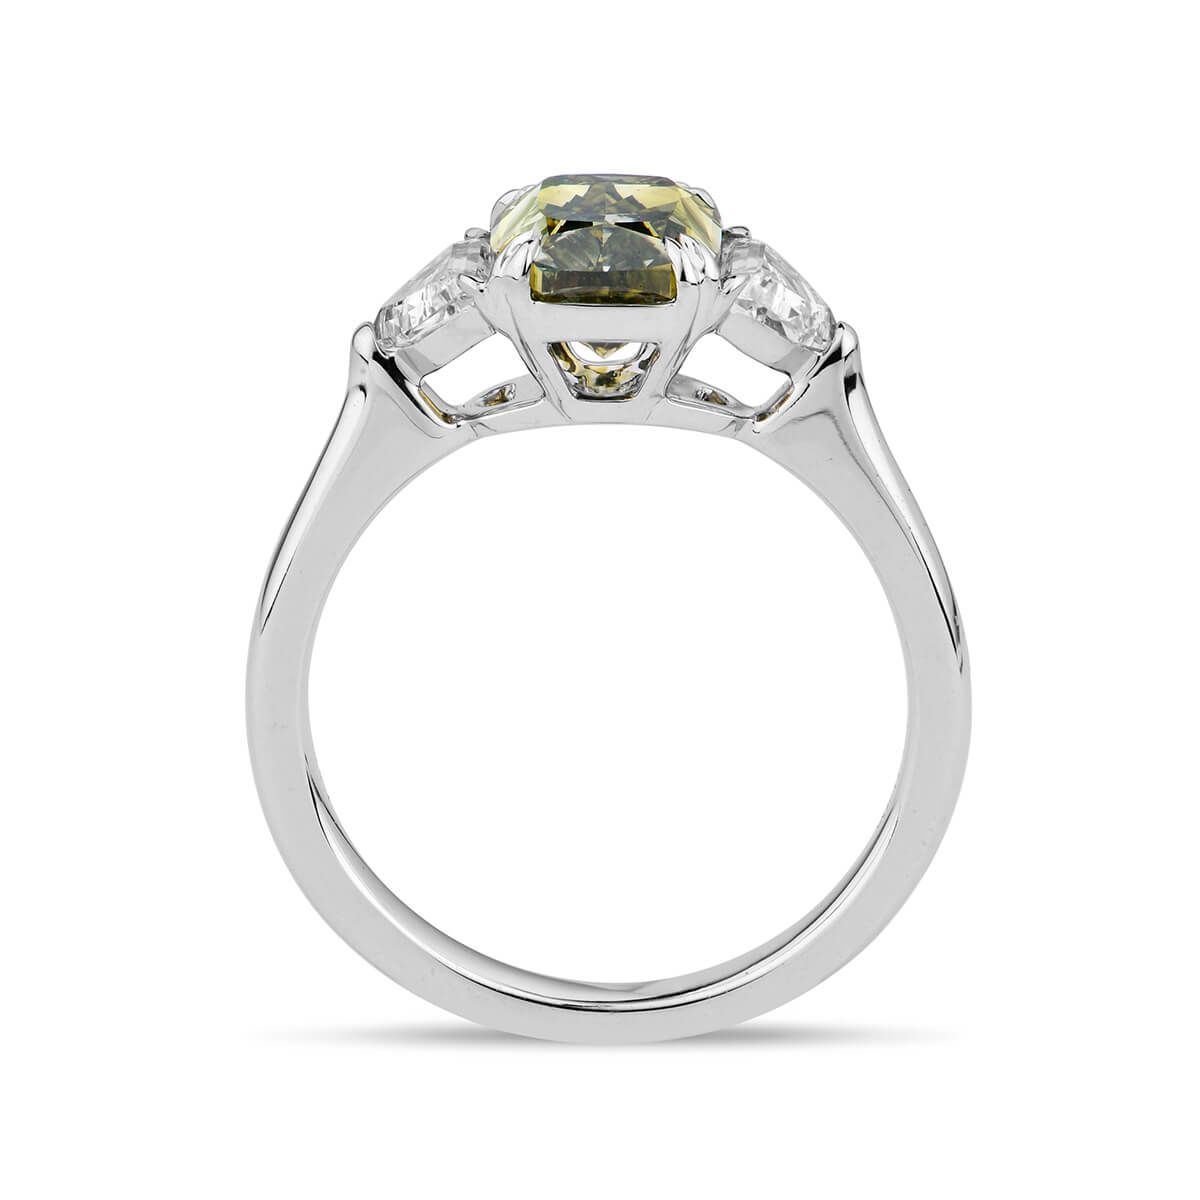 Fancy Deep Brownish Greenish Yellow Diamond Ring, 2.63 Ct. TW, Cushion shape, GIA Certified, 1156325483